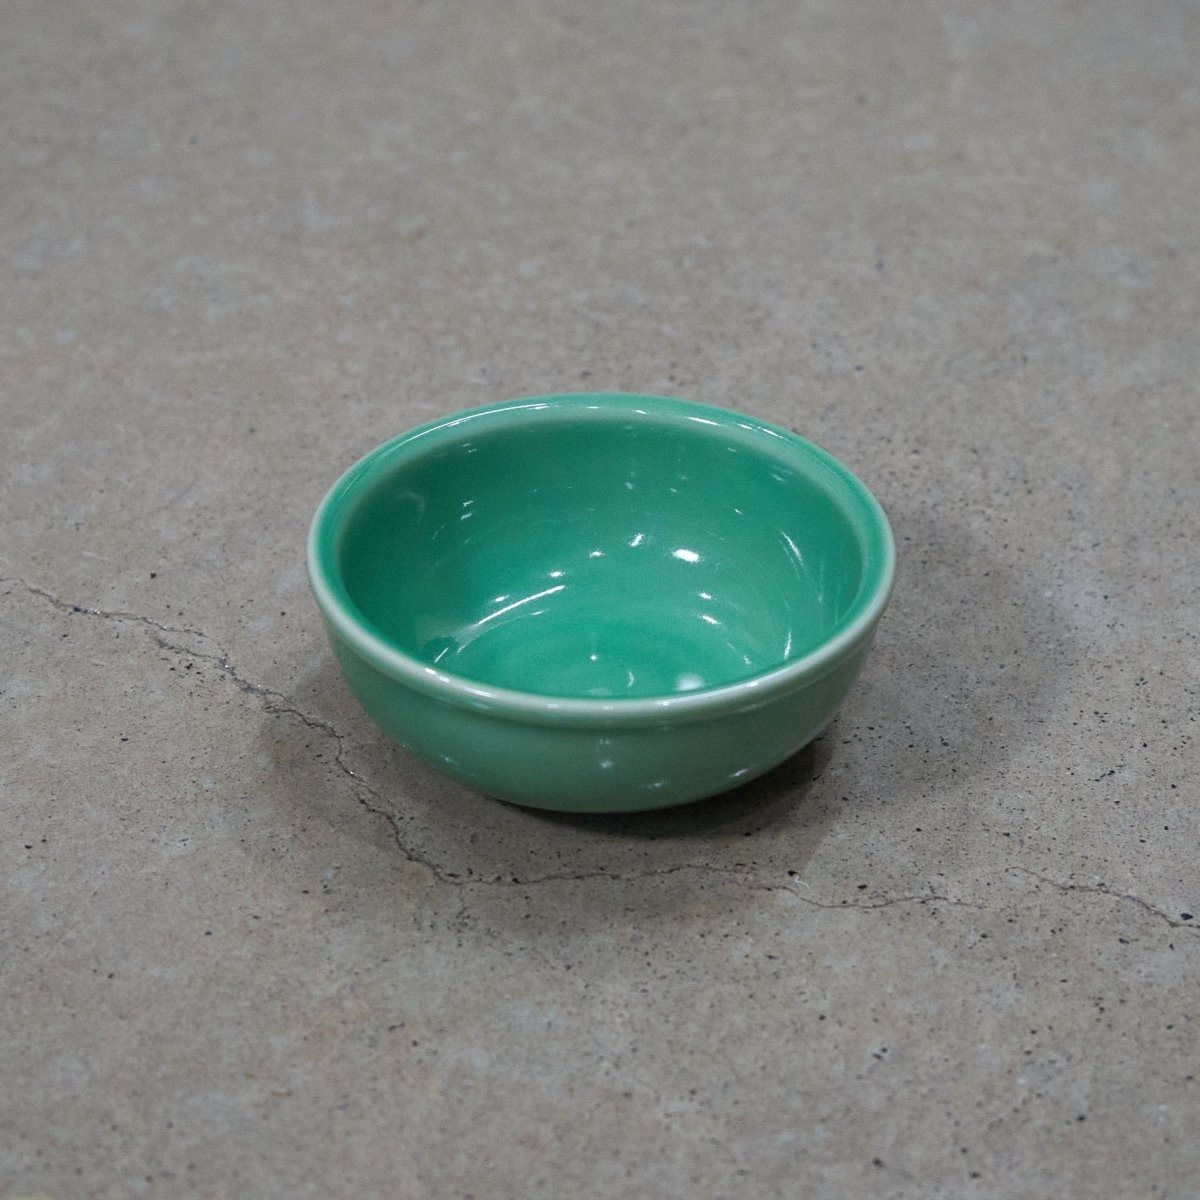 Koyo Japan - Small Retro Bowl - Green 10cm - gifu.au -Koyo Japan